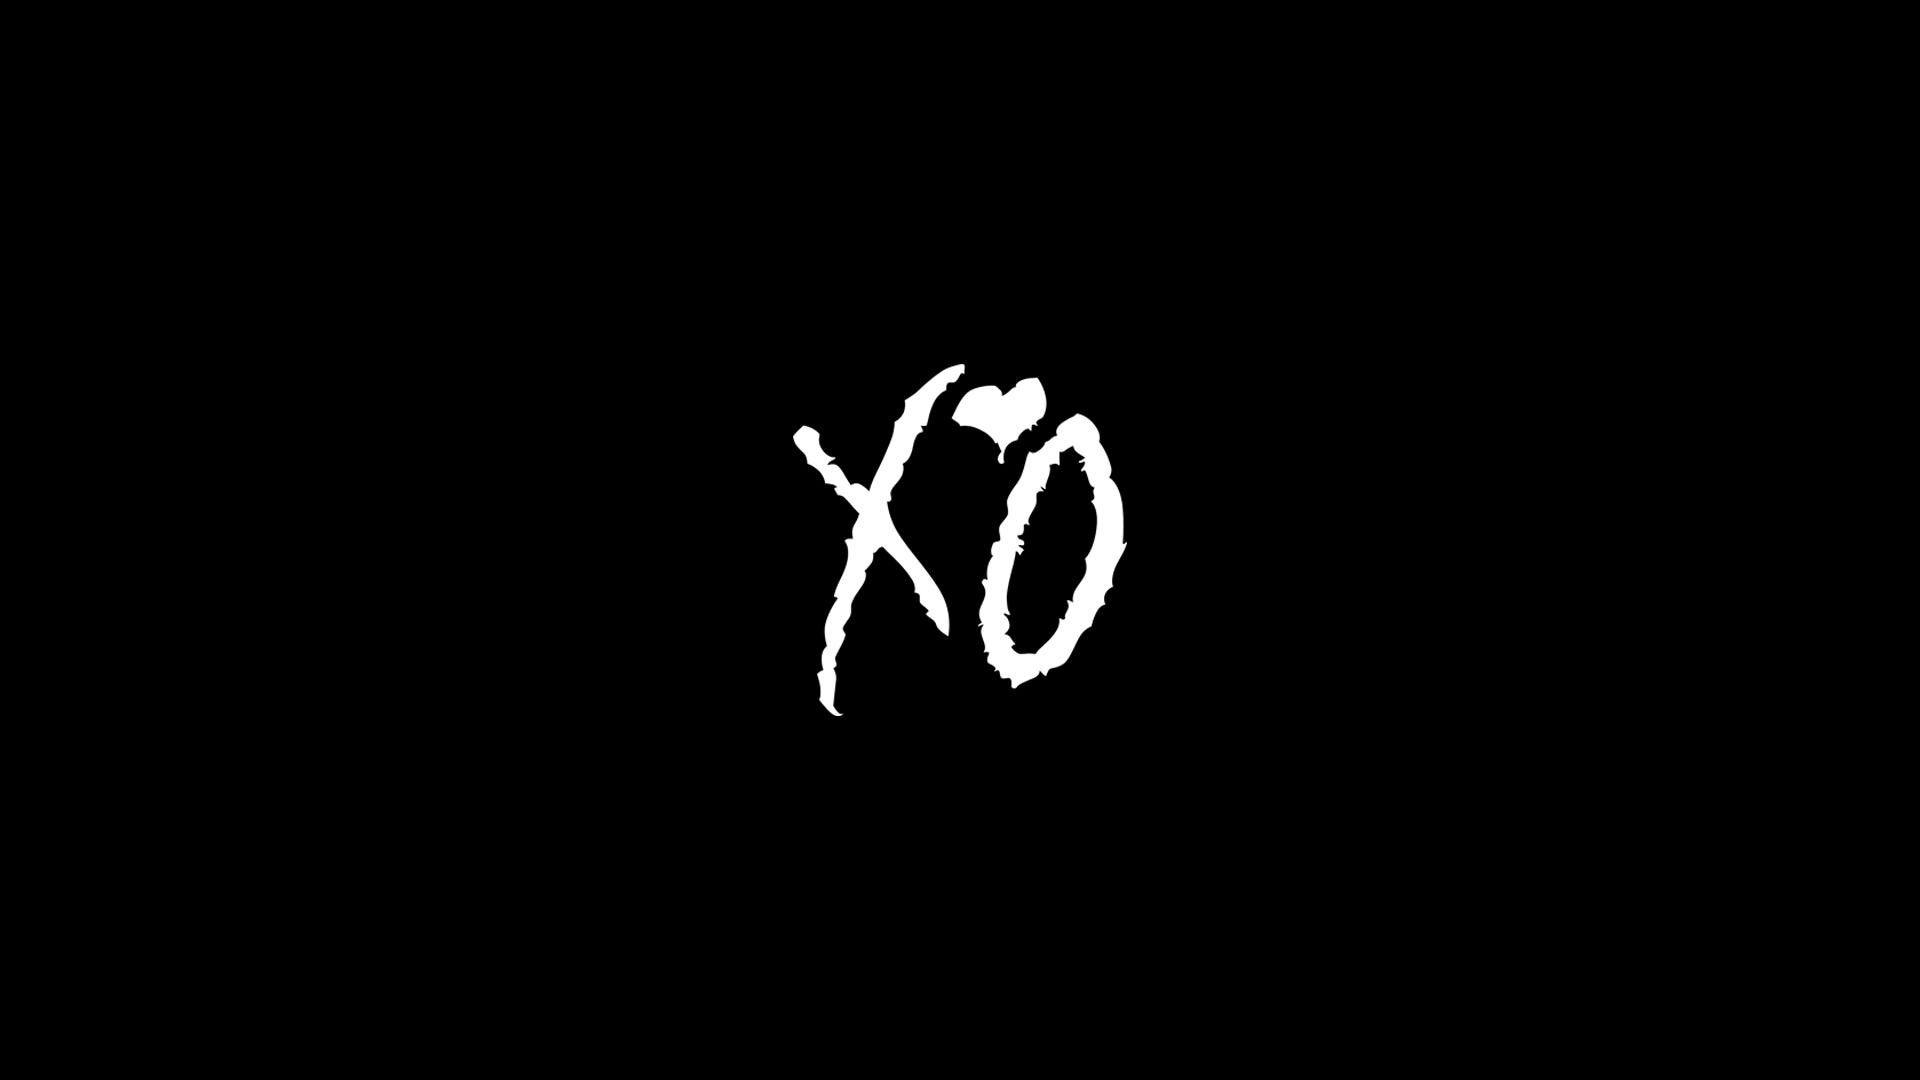 The Weeknd Xo Wallpaper Free The Weeknd Xo Background